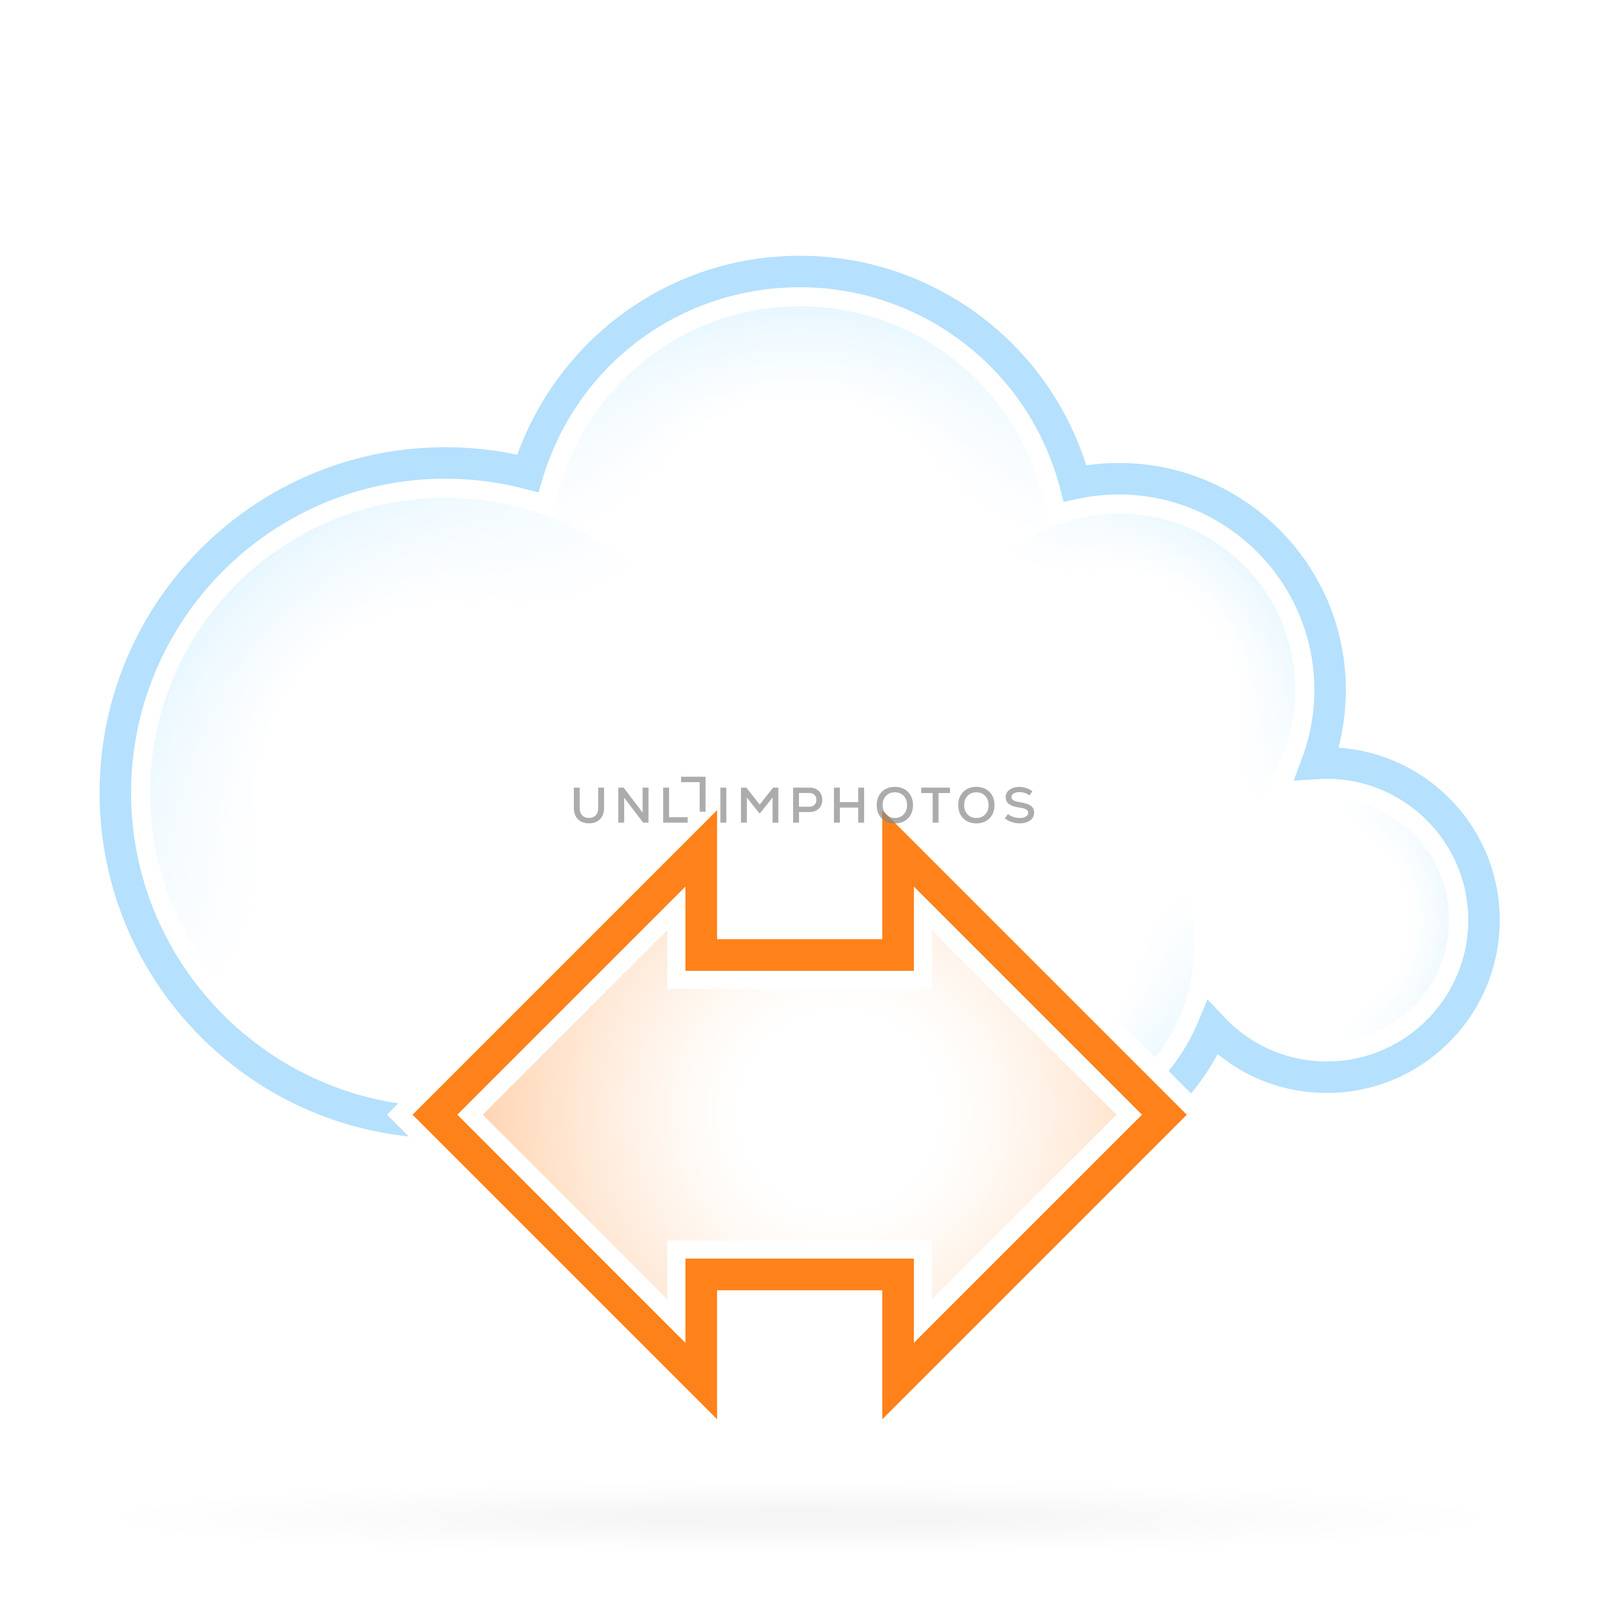 Cloud Computing Icon Communication isolated on white